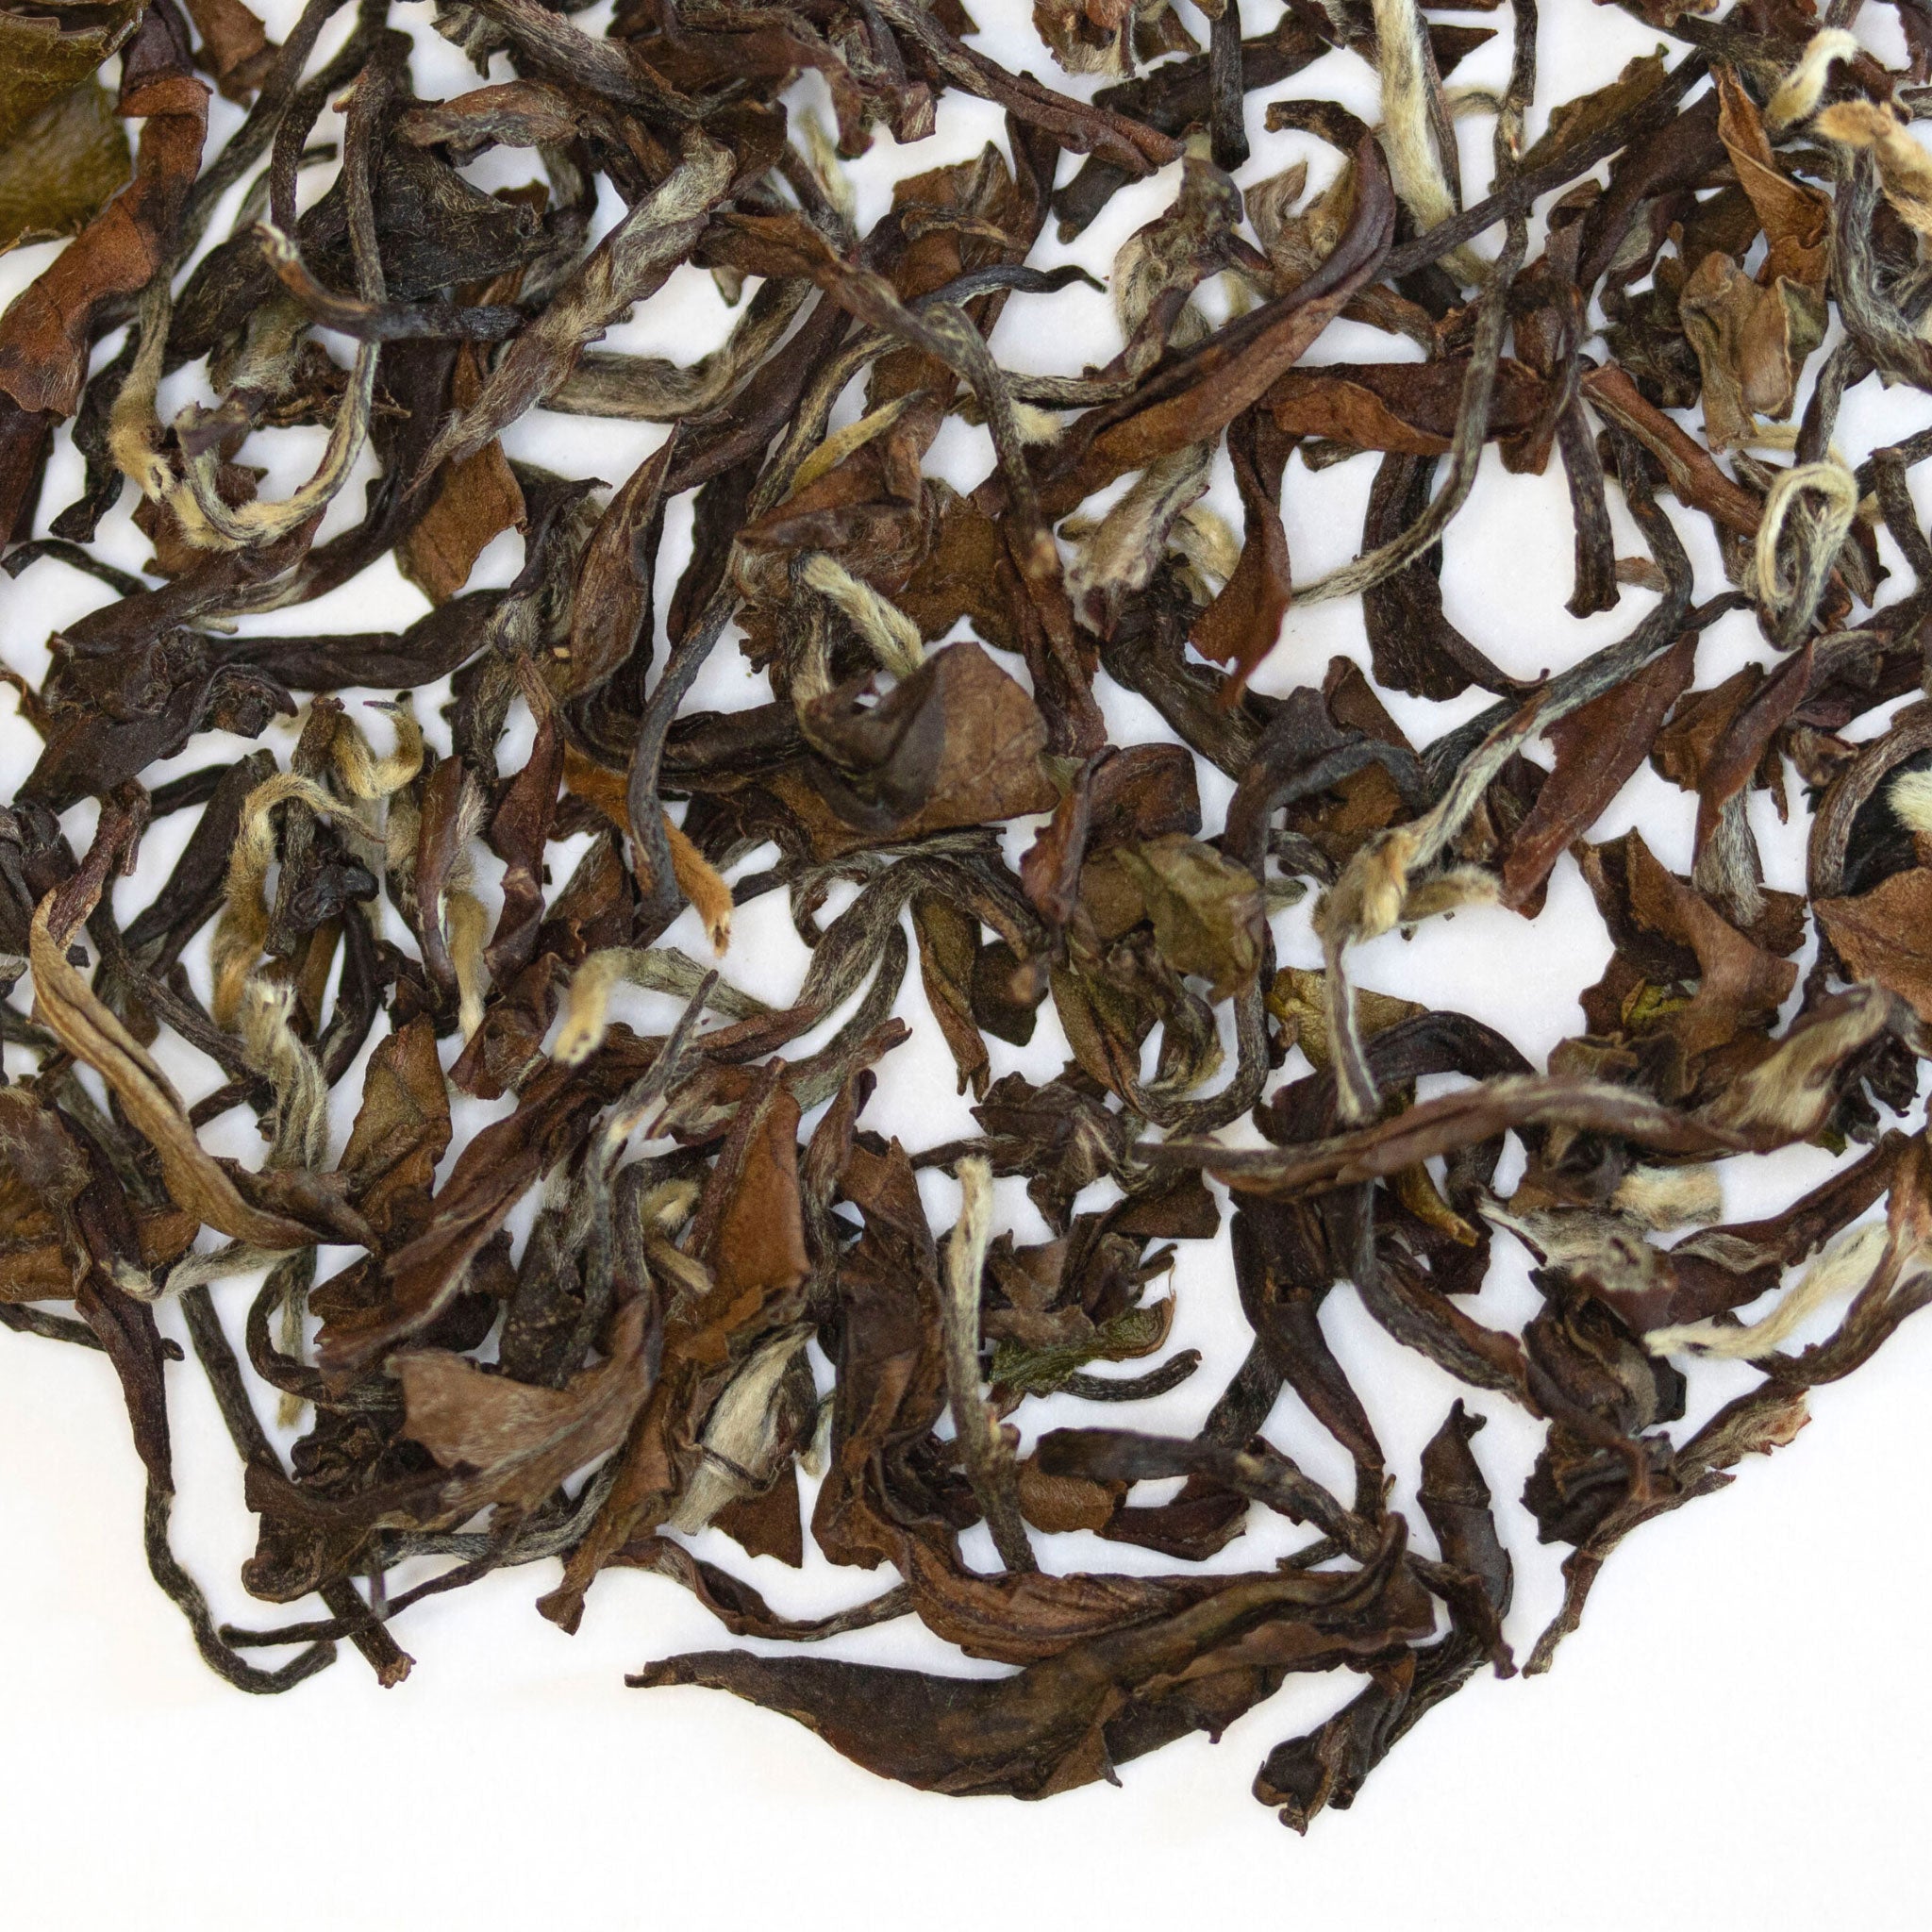 Loose leaf Hawkin's Rail Darjeeling 2nd Flush Indian black tea